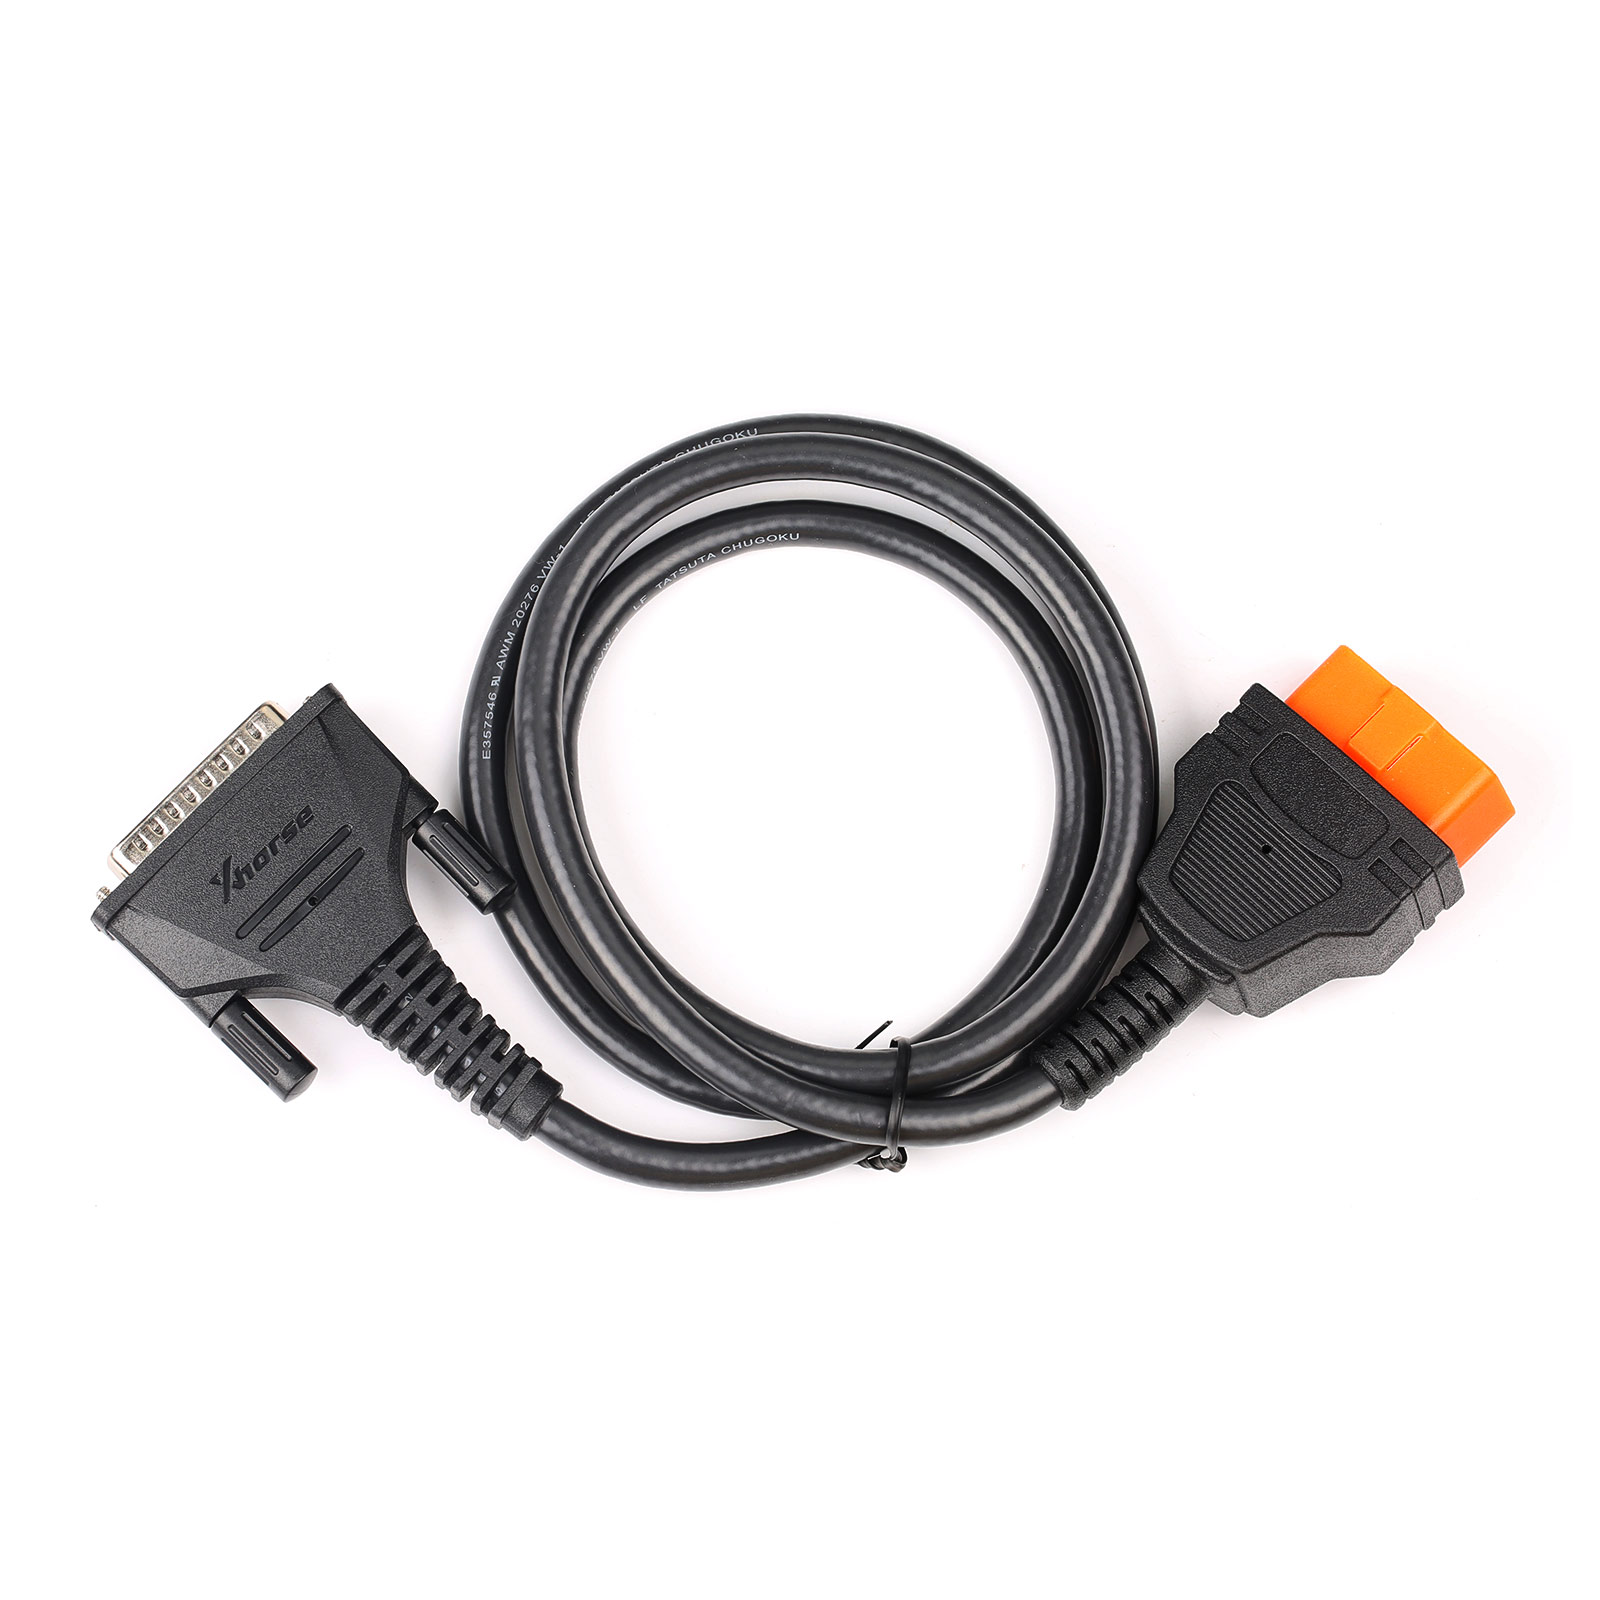 VVDI2 Main Test Cable for XHORSE VVDI 2 Commander Key Programmer